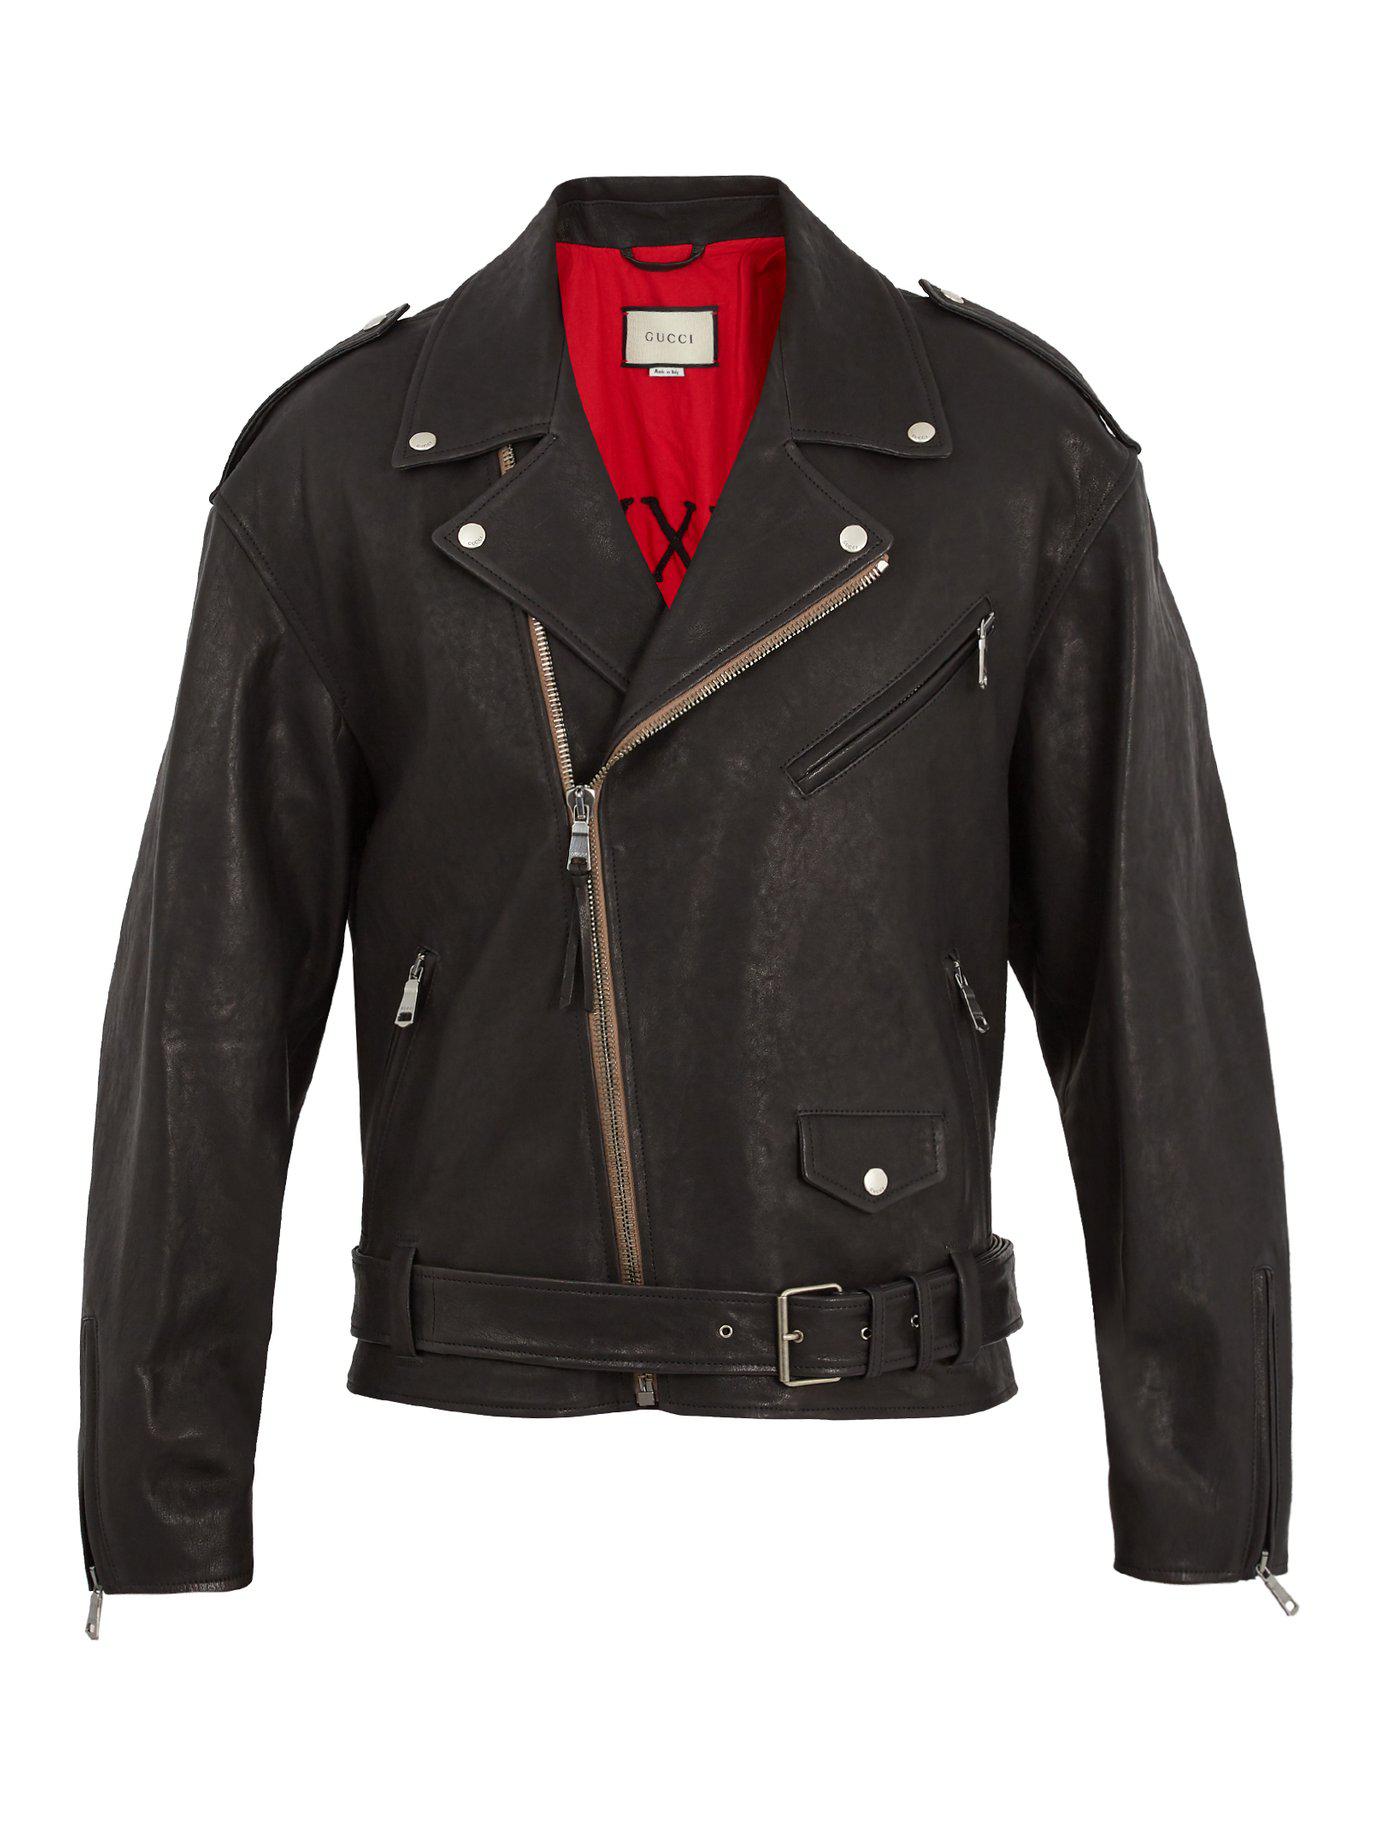 Gucci Dragon Appliqué Leather Jacket in Black for Men | Lyst